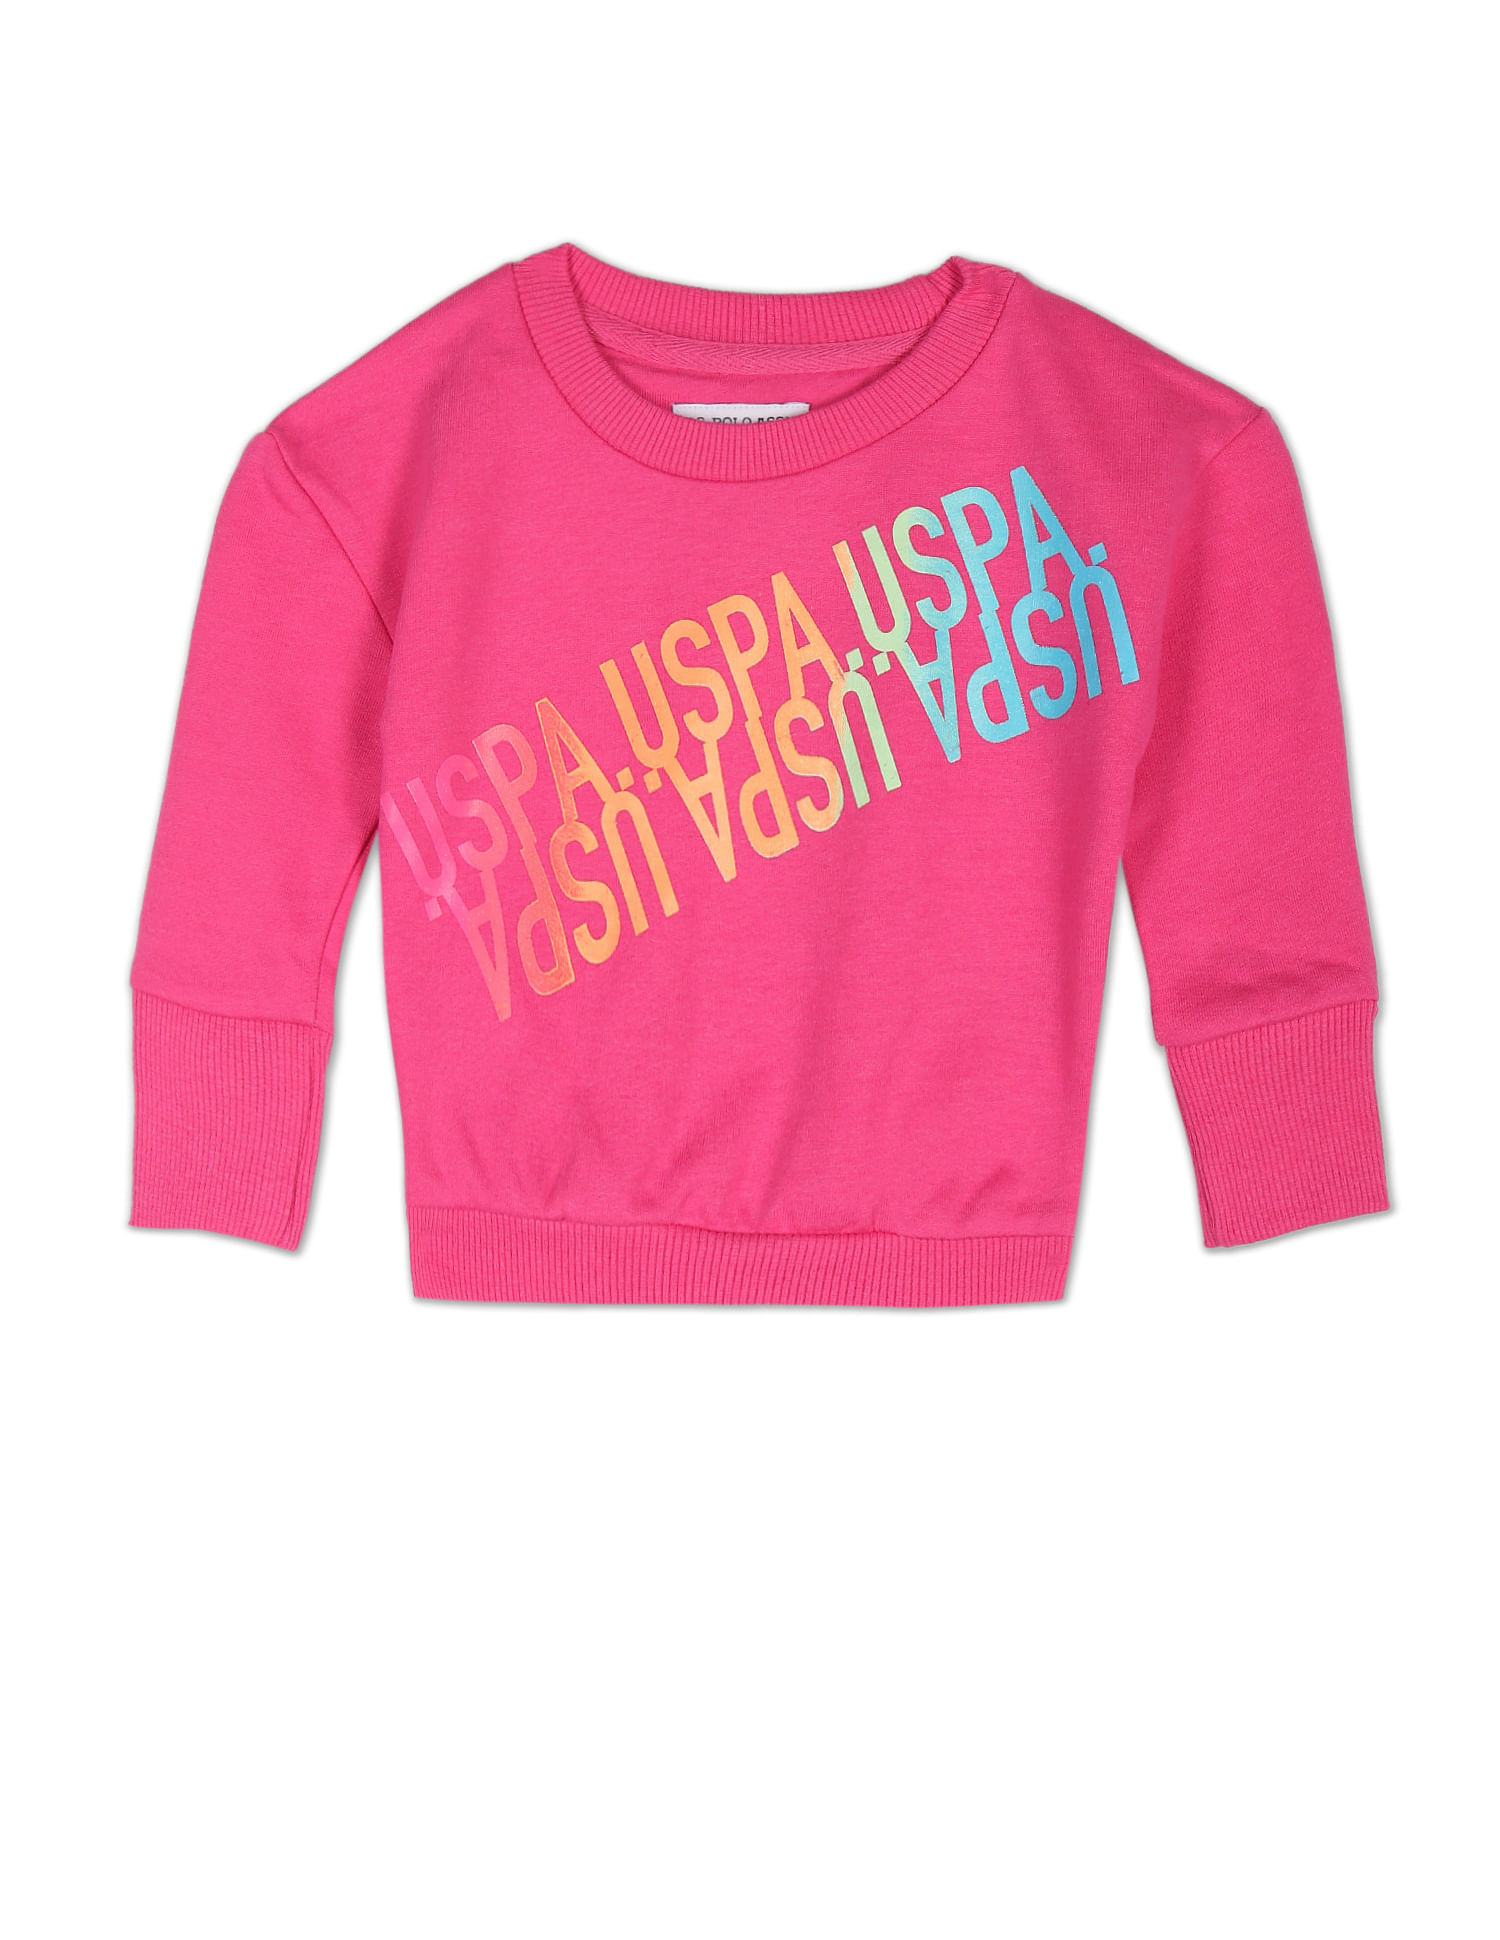 Buy U.S. Polo Assn. Kids Solid Crew Neck Cotton Sweatshirt - NNNOW.com